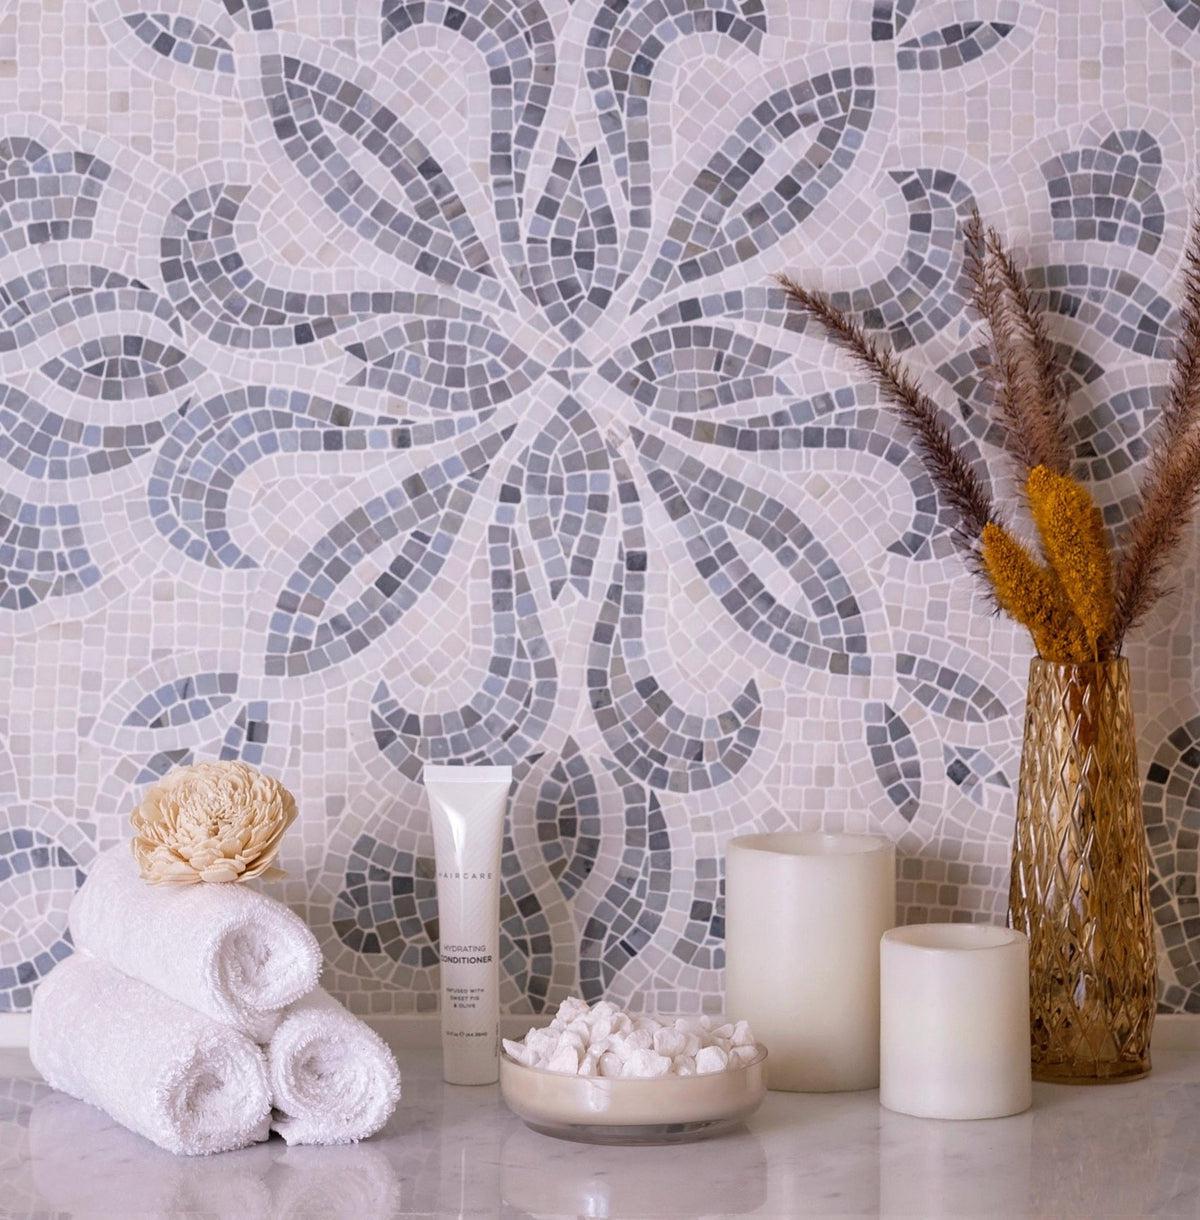 Bloom Fleur de Lis Inspired Mosaic Tile Pattern